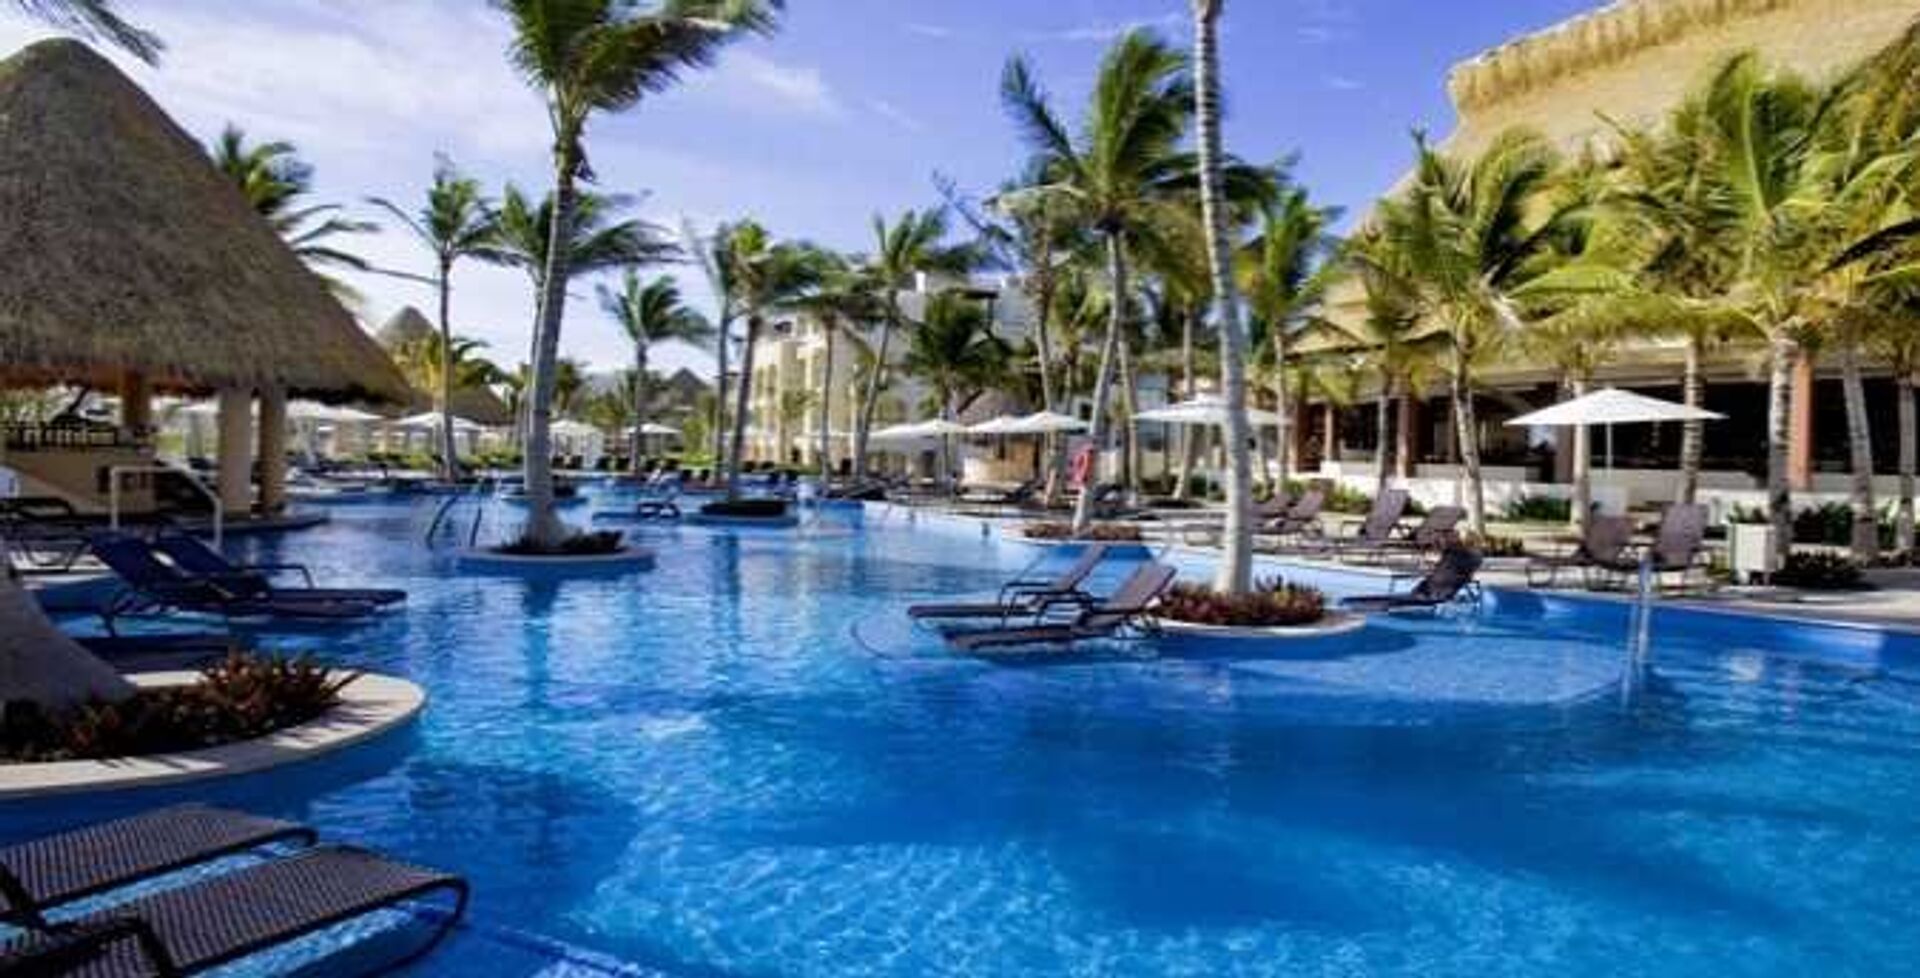 #Отель Moon Palace Casino, Golf & Spa Resort, ставший Hard Rock Hotel & Casino Punta Cana - ПРАЙМ, 1920, 09.09.2022